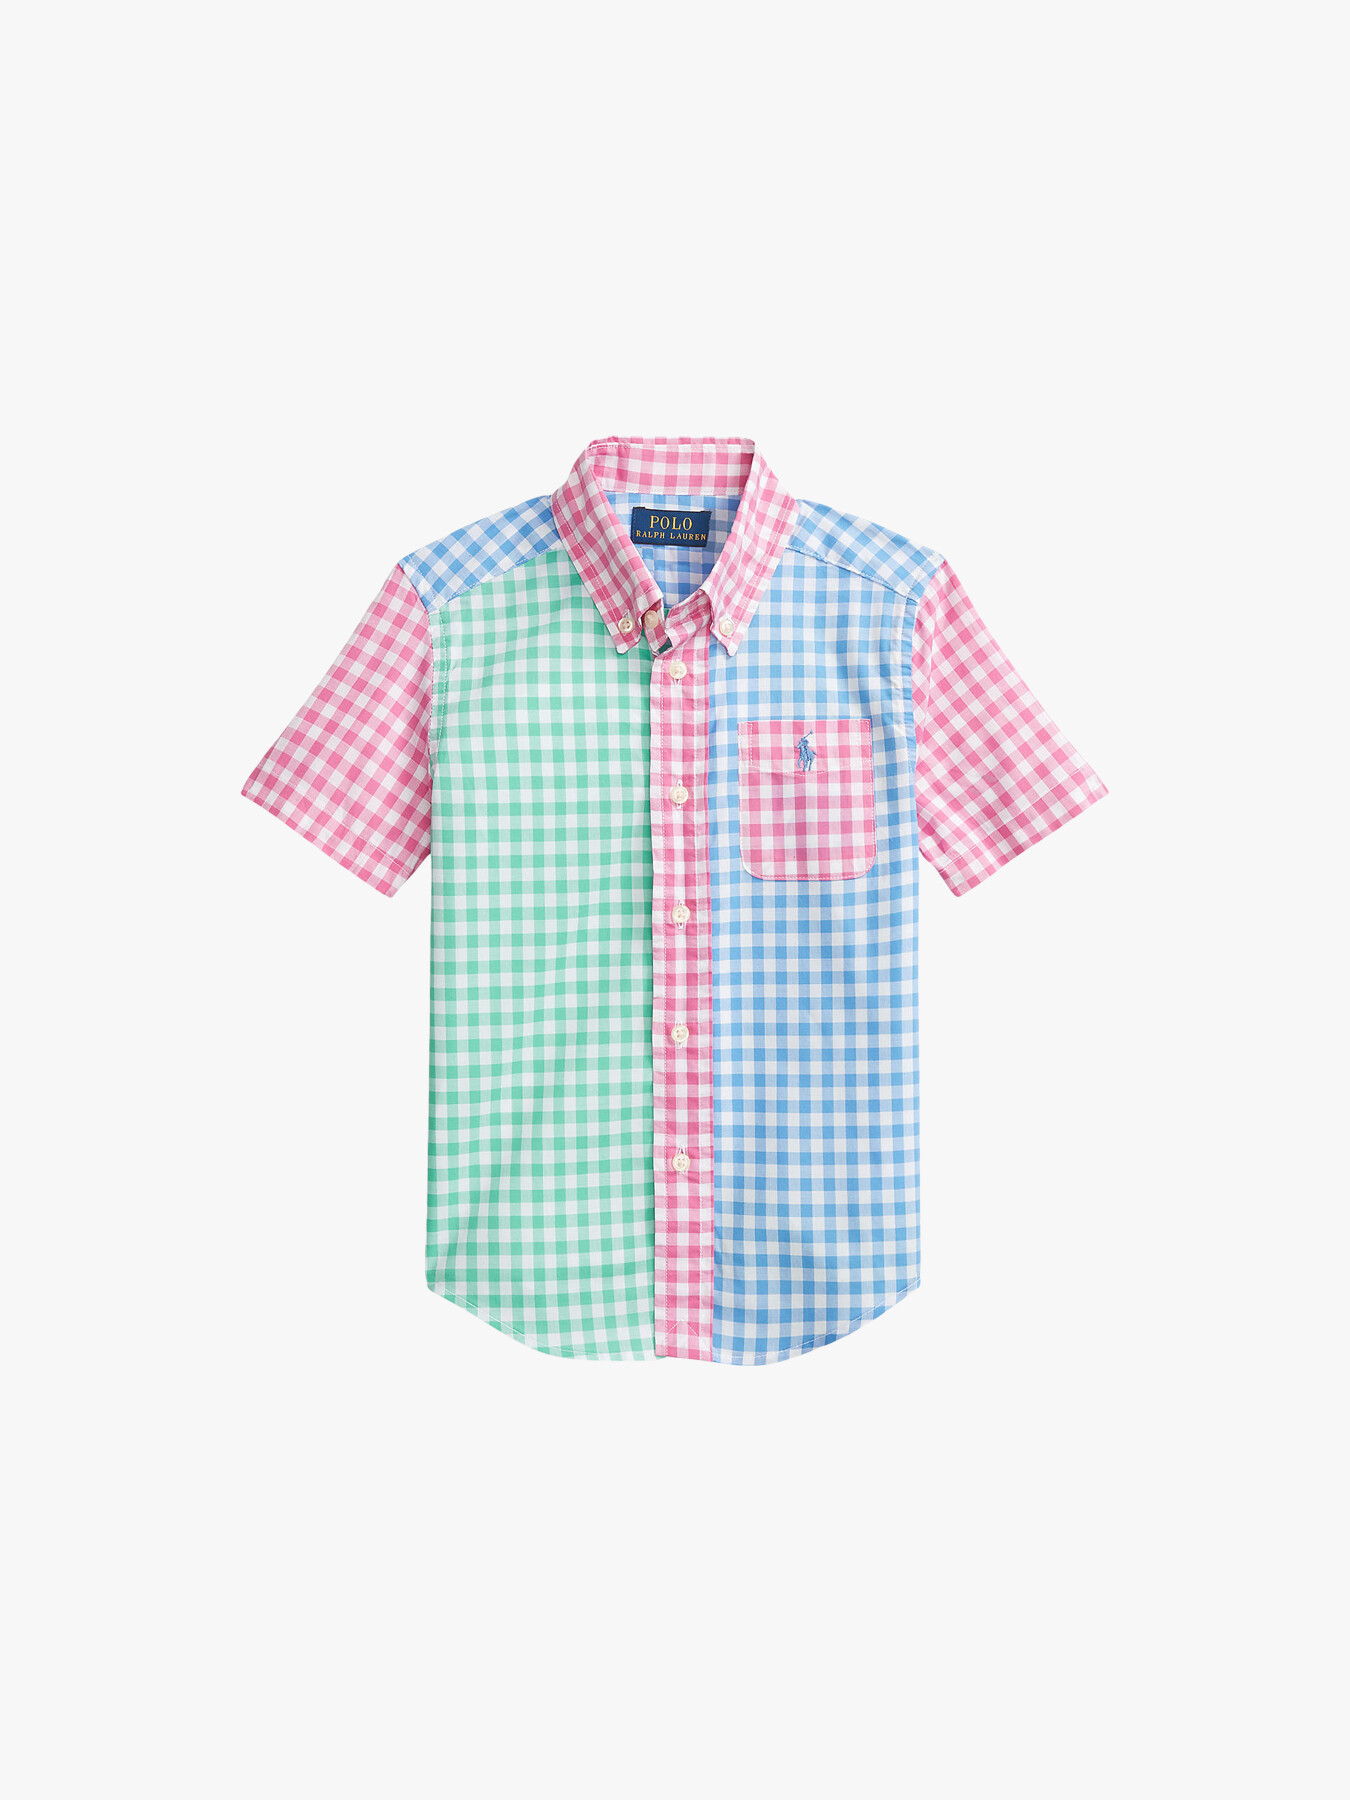 Polo Ralph Lauren Poplin Short Sleeve Fun Shirt | Shirts | Fenwick